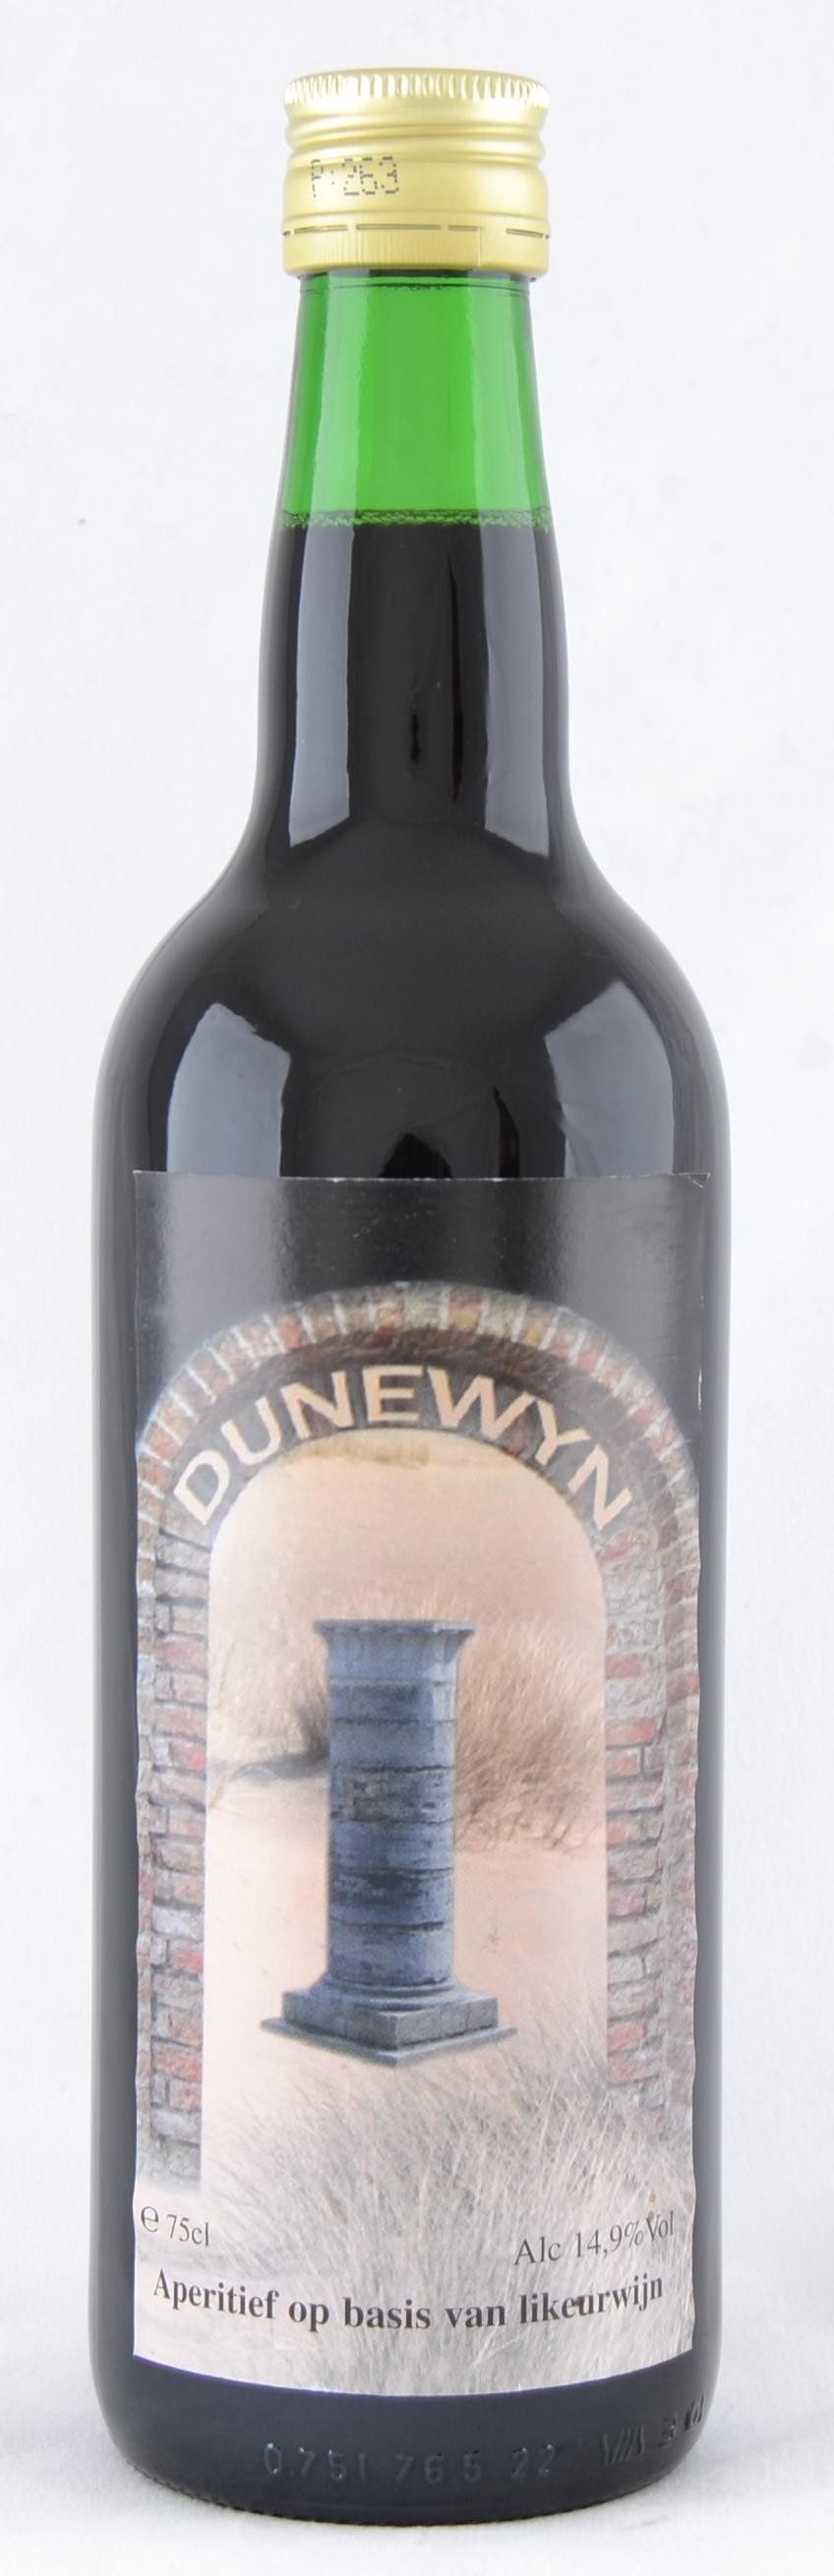 Dunewyn 75cl 14.9% aperitif